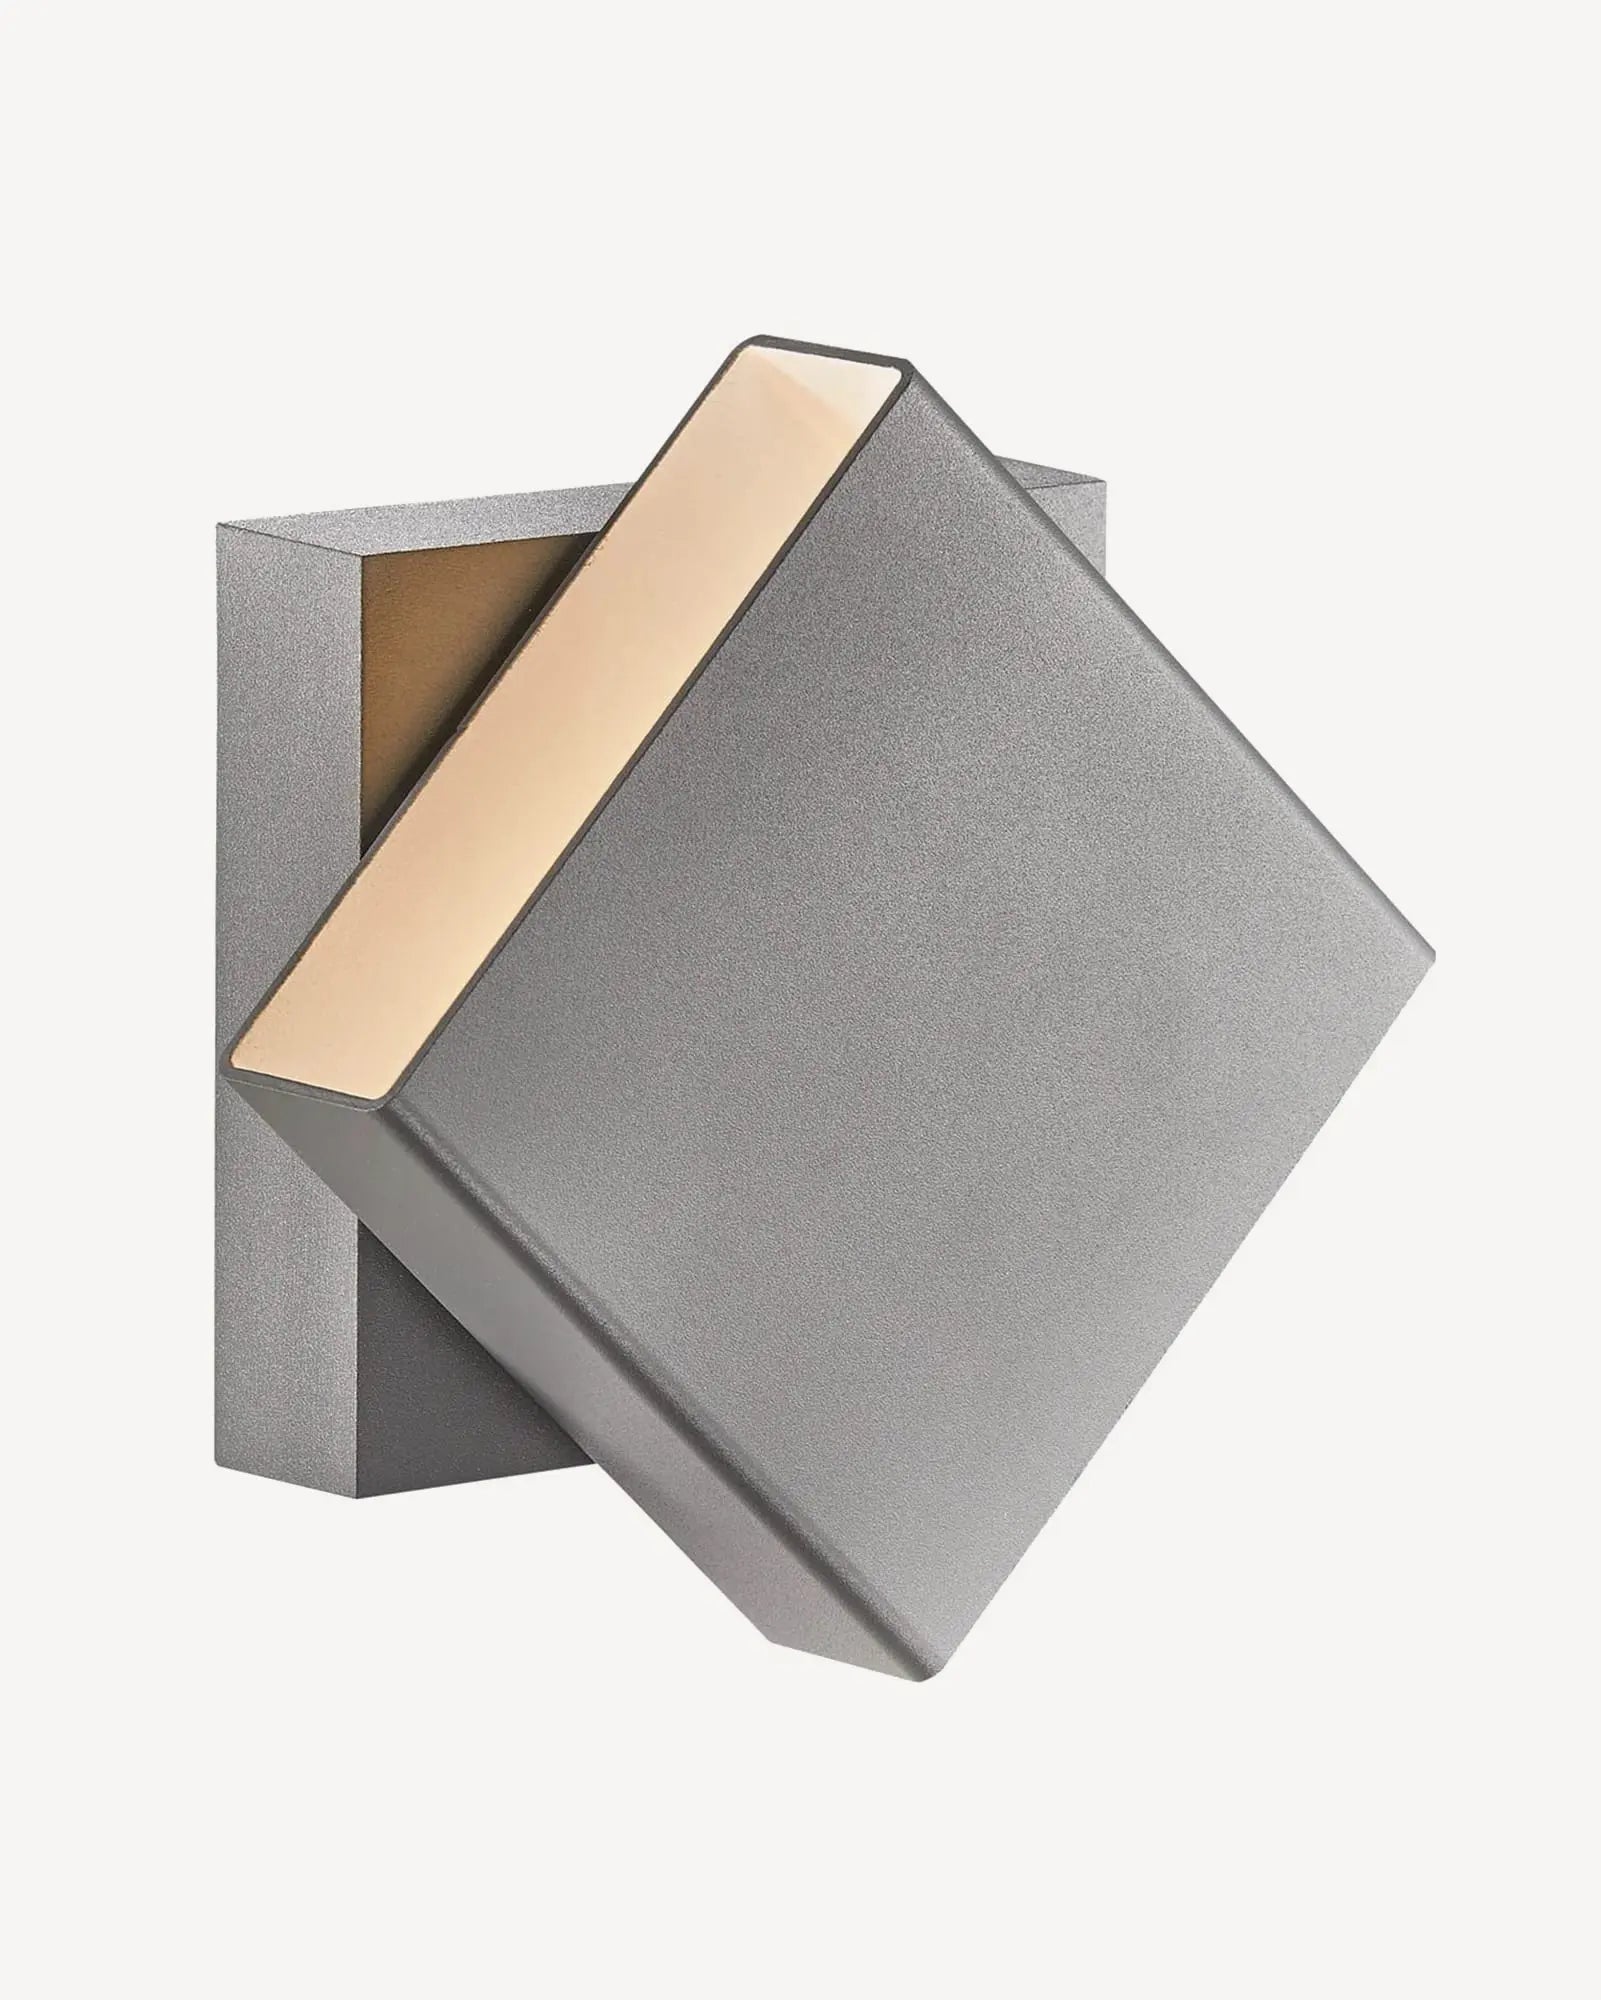 Turn Scandinavian adjustable rectangular wall light grey